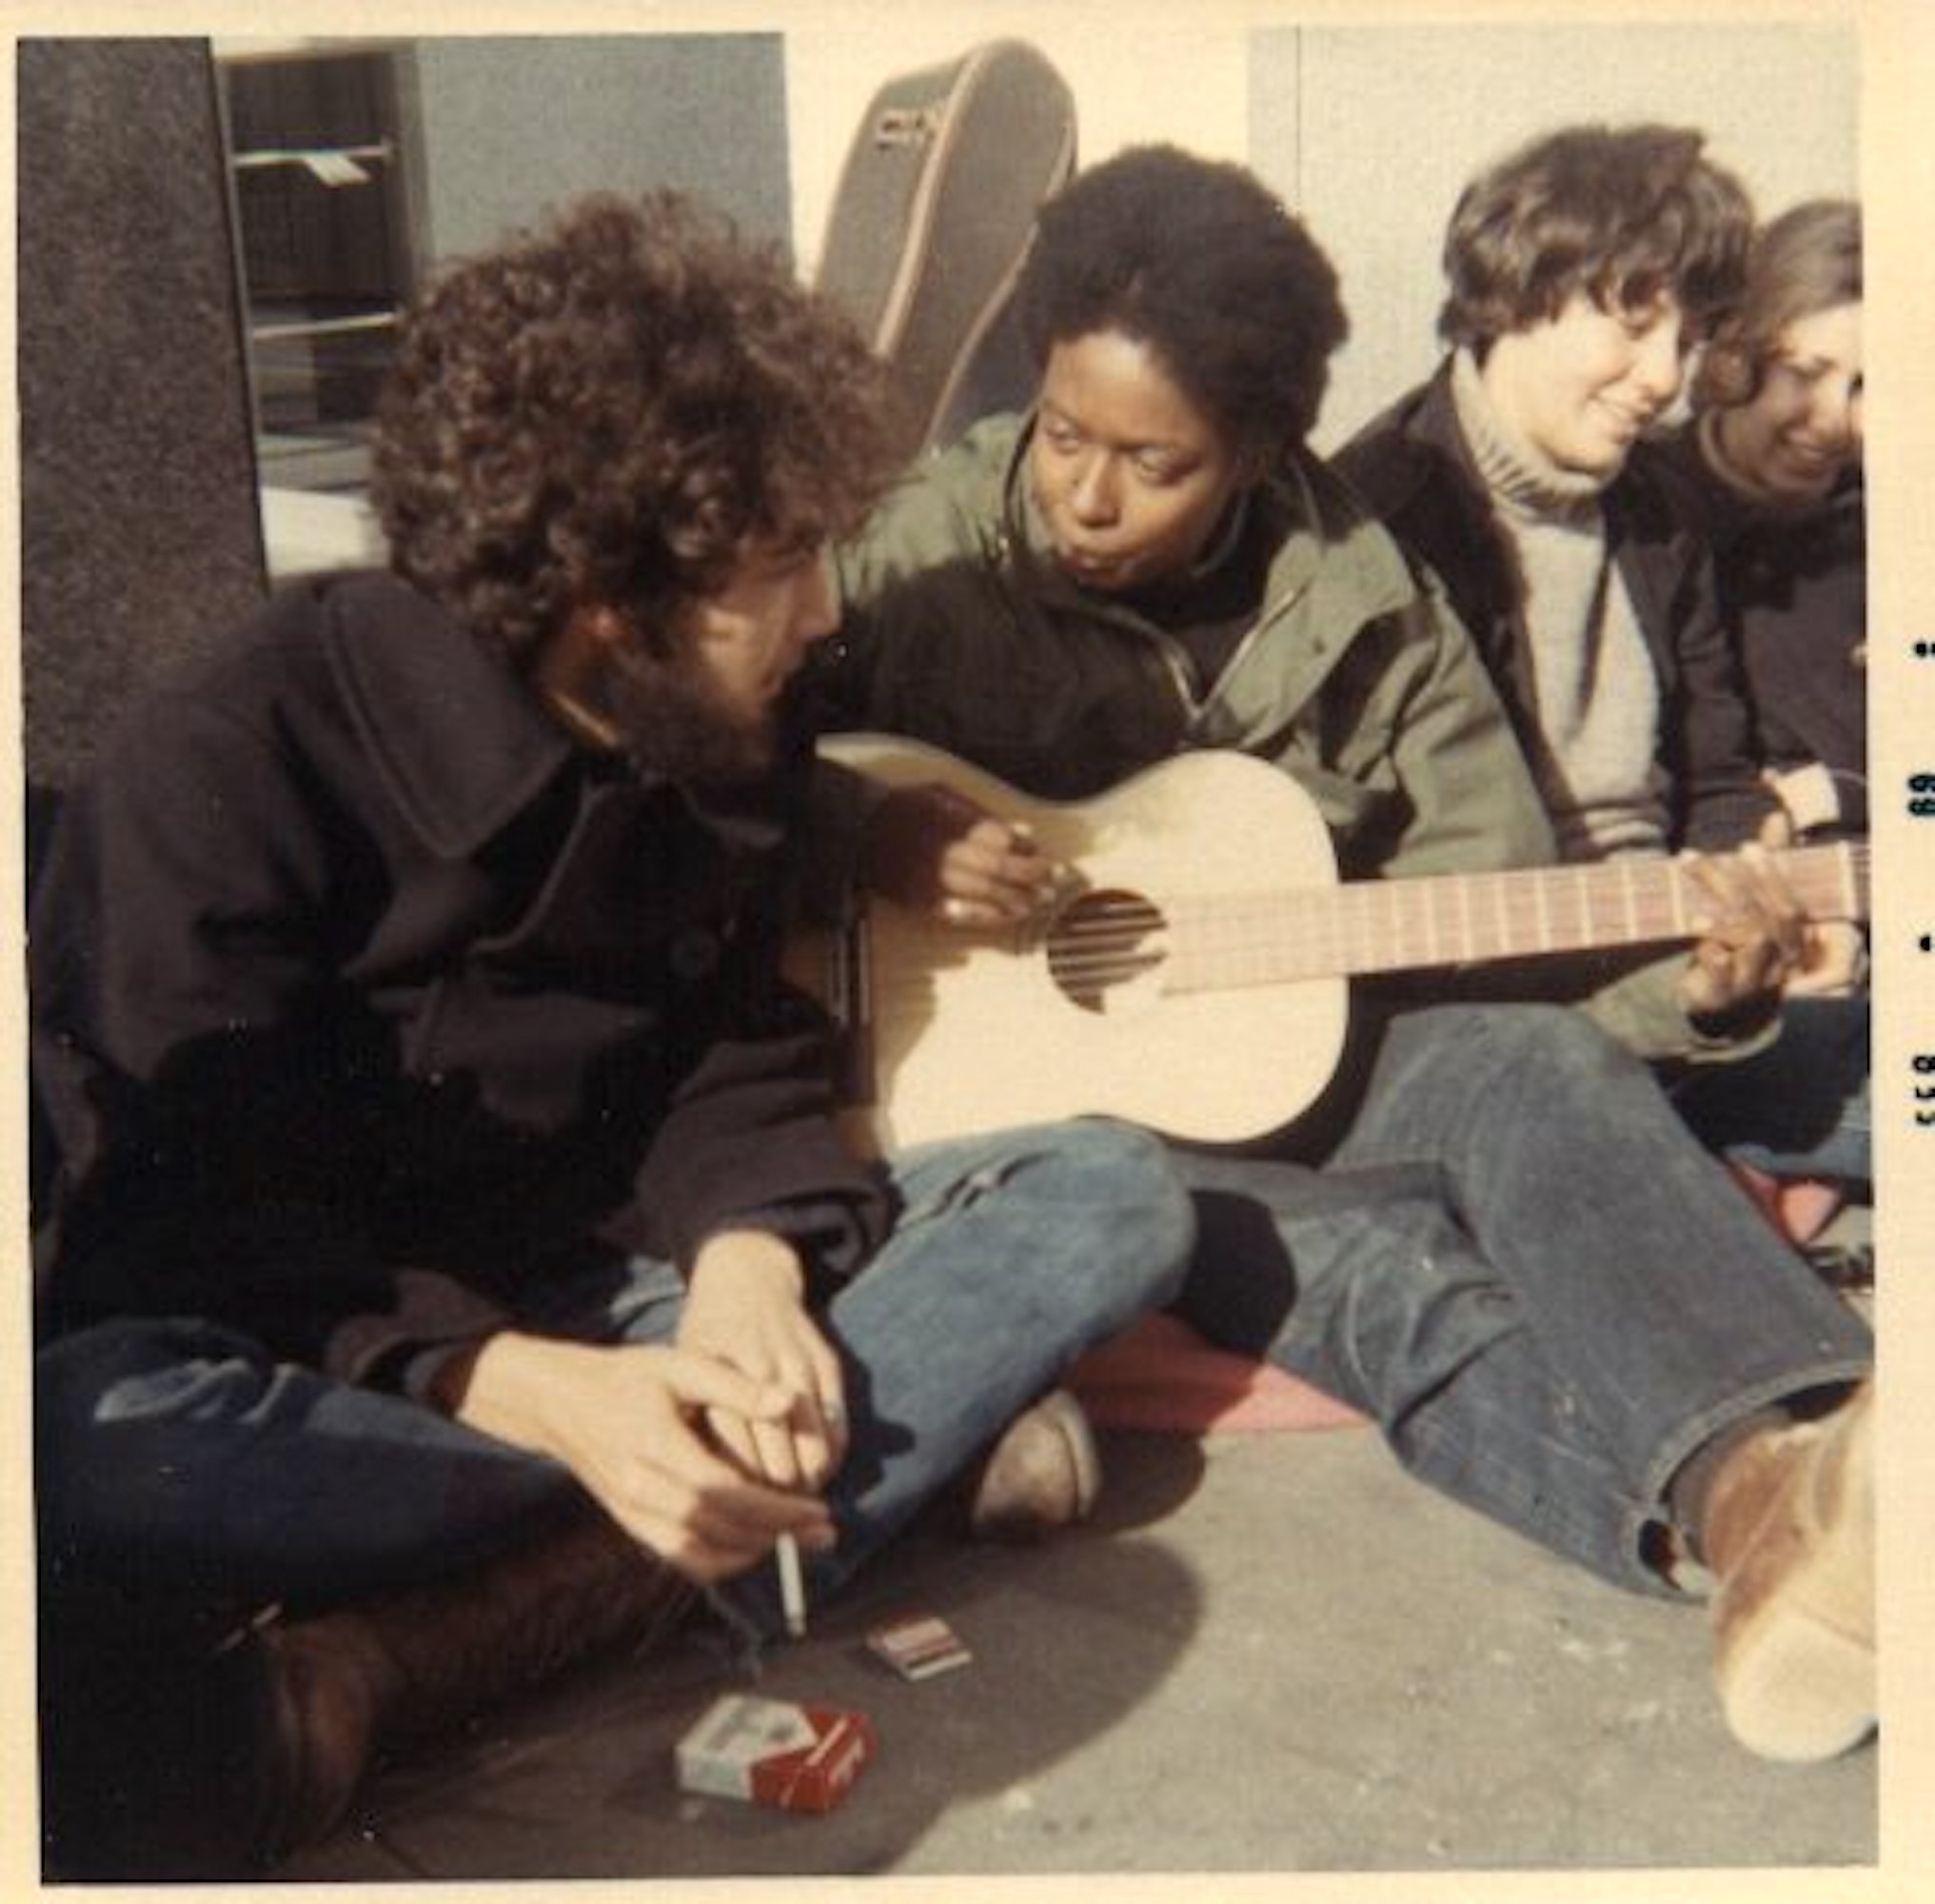 Mandy playing guitar at the Biafra Festival, 1969. San Francisco, CA. Photo courtesy of Mandy Carter.